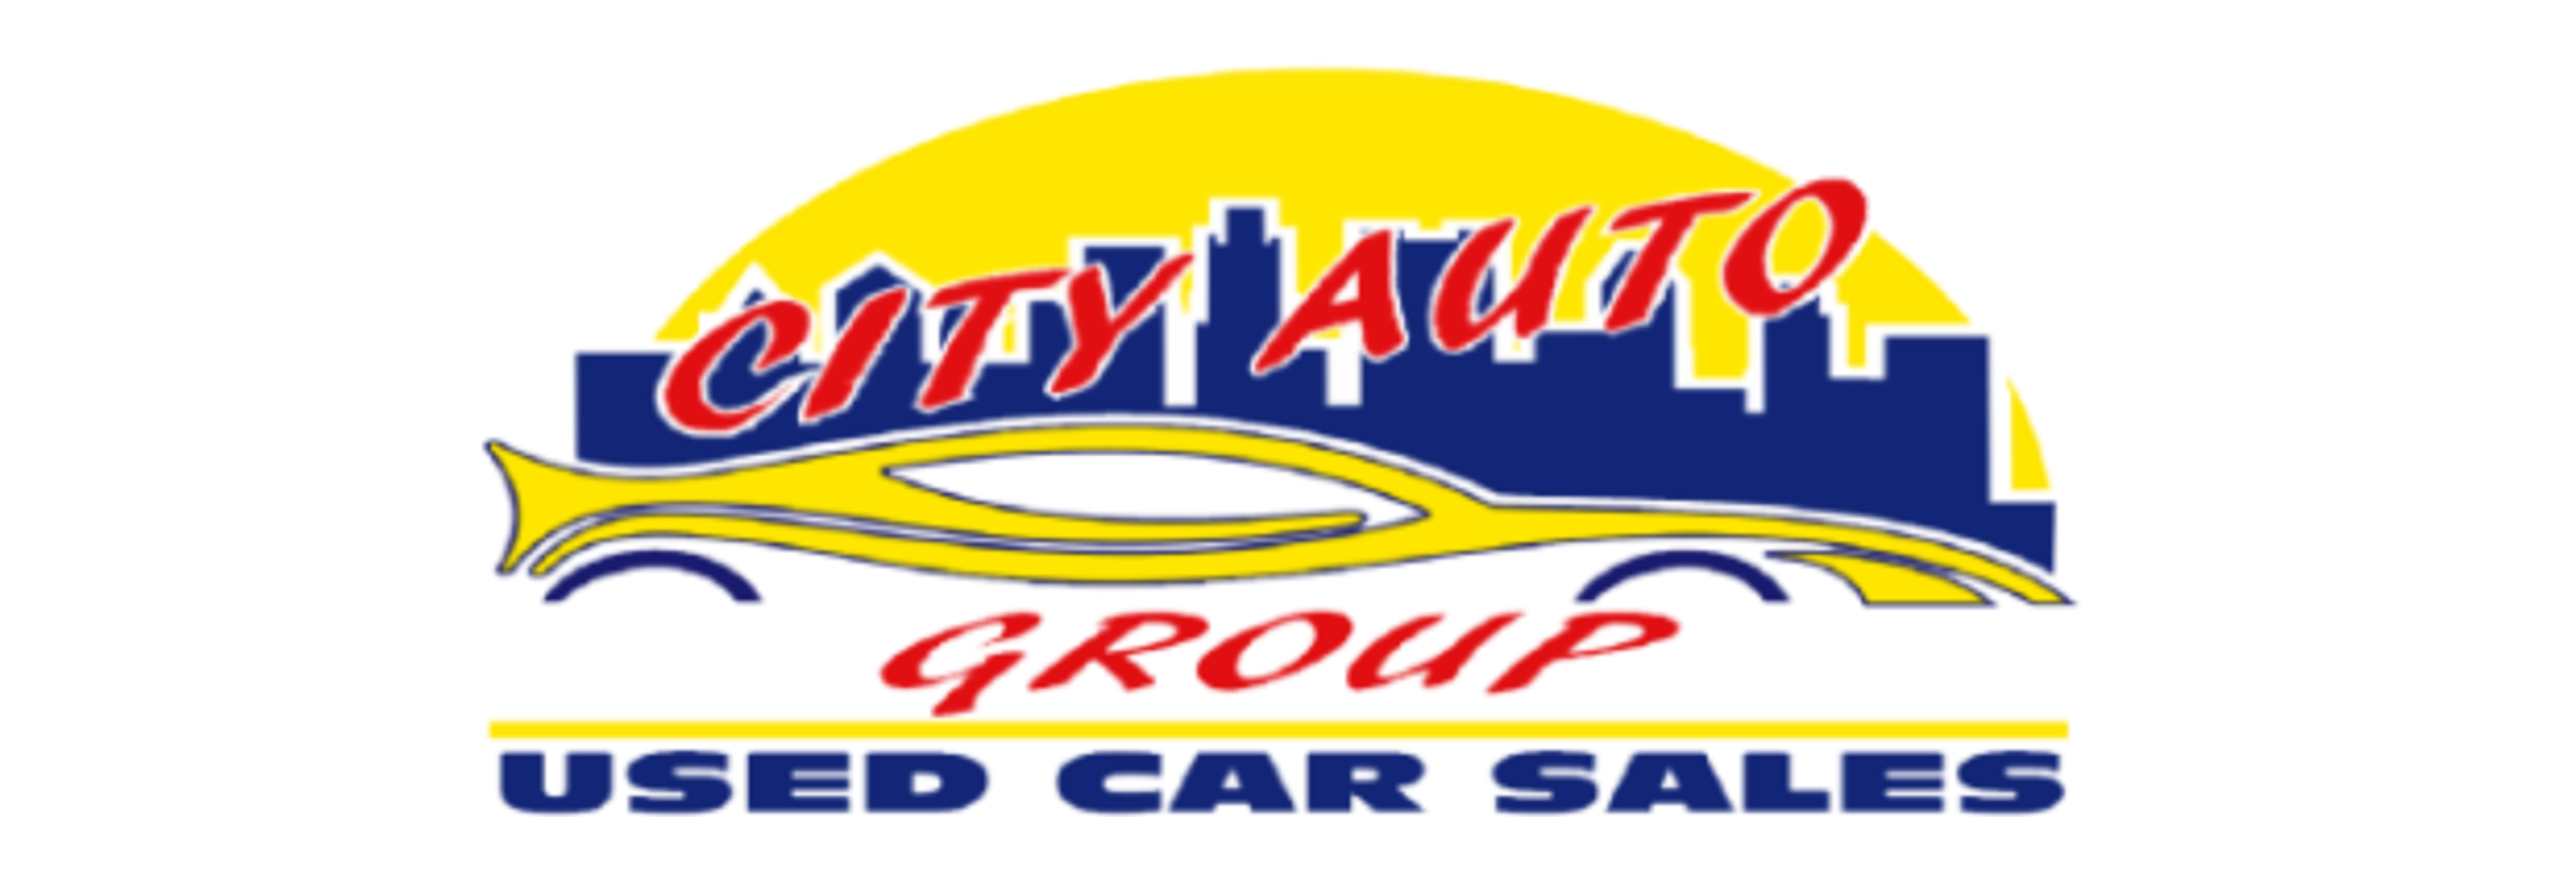 City Auto Group Glendale